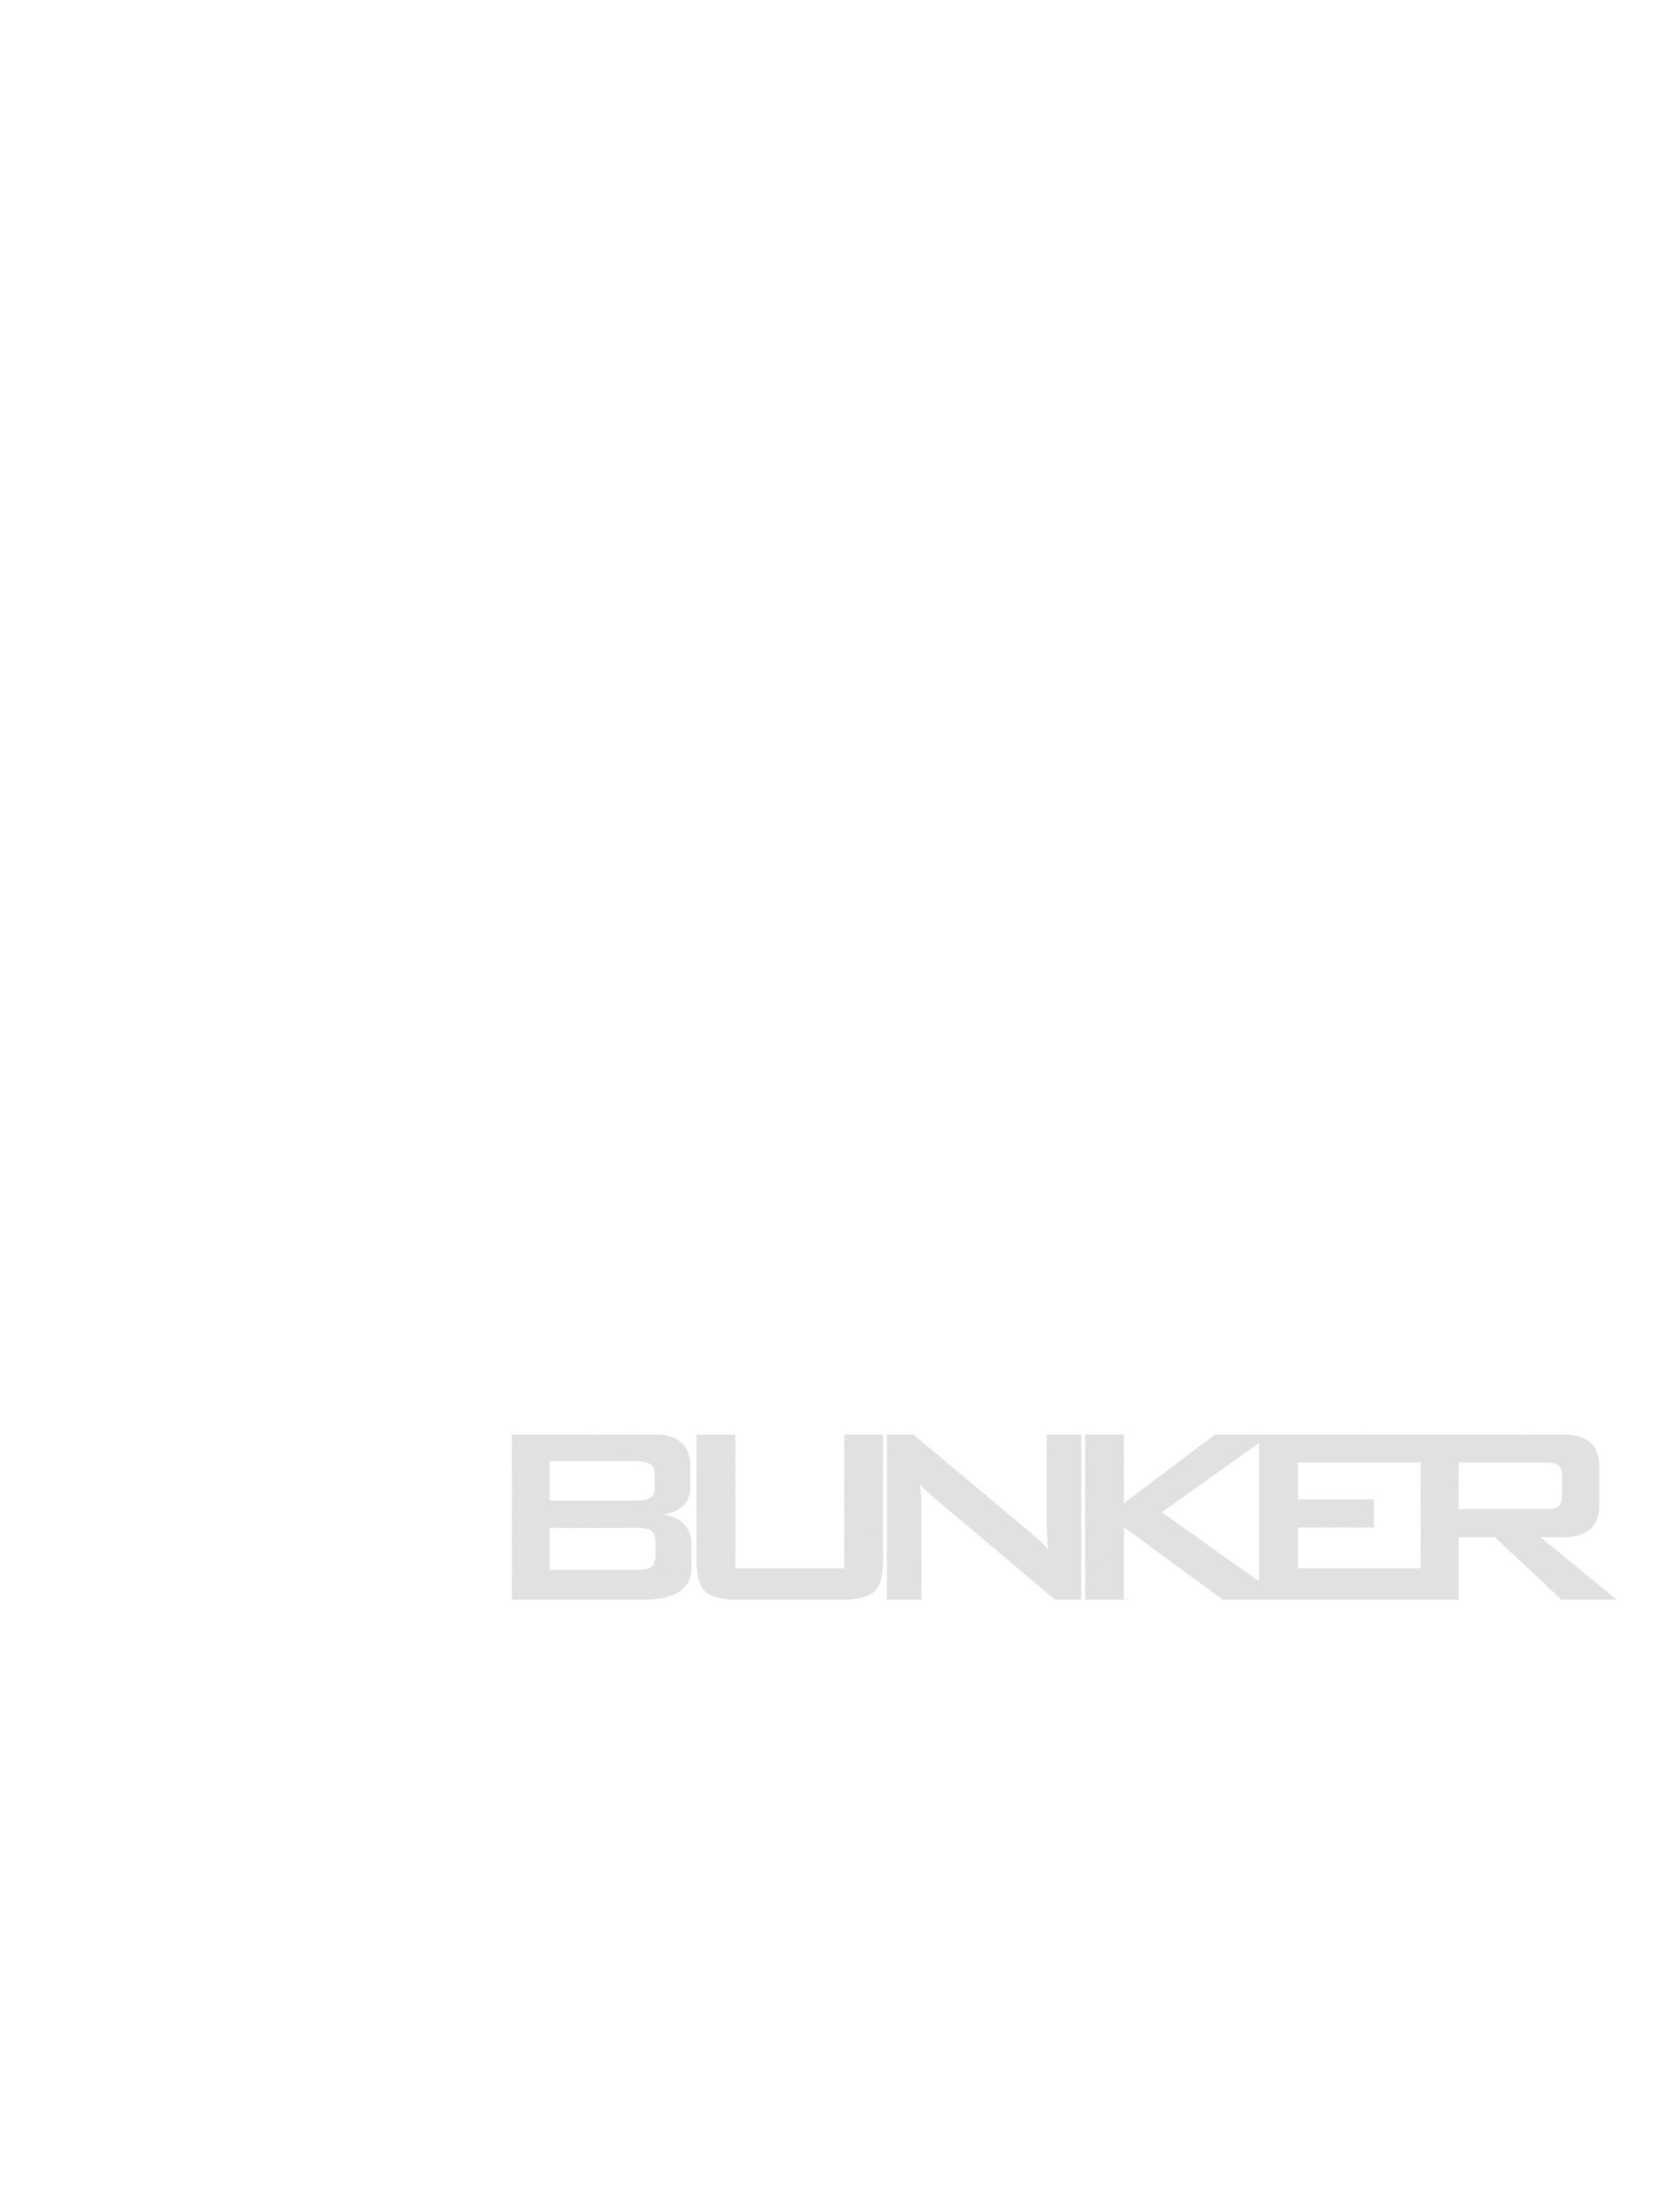 Read online Bunker comic -  Issue #4 - 3